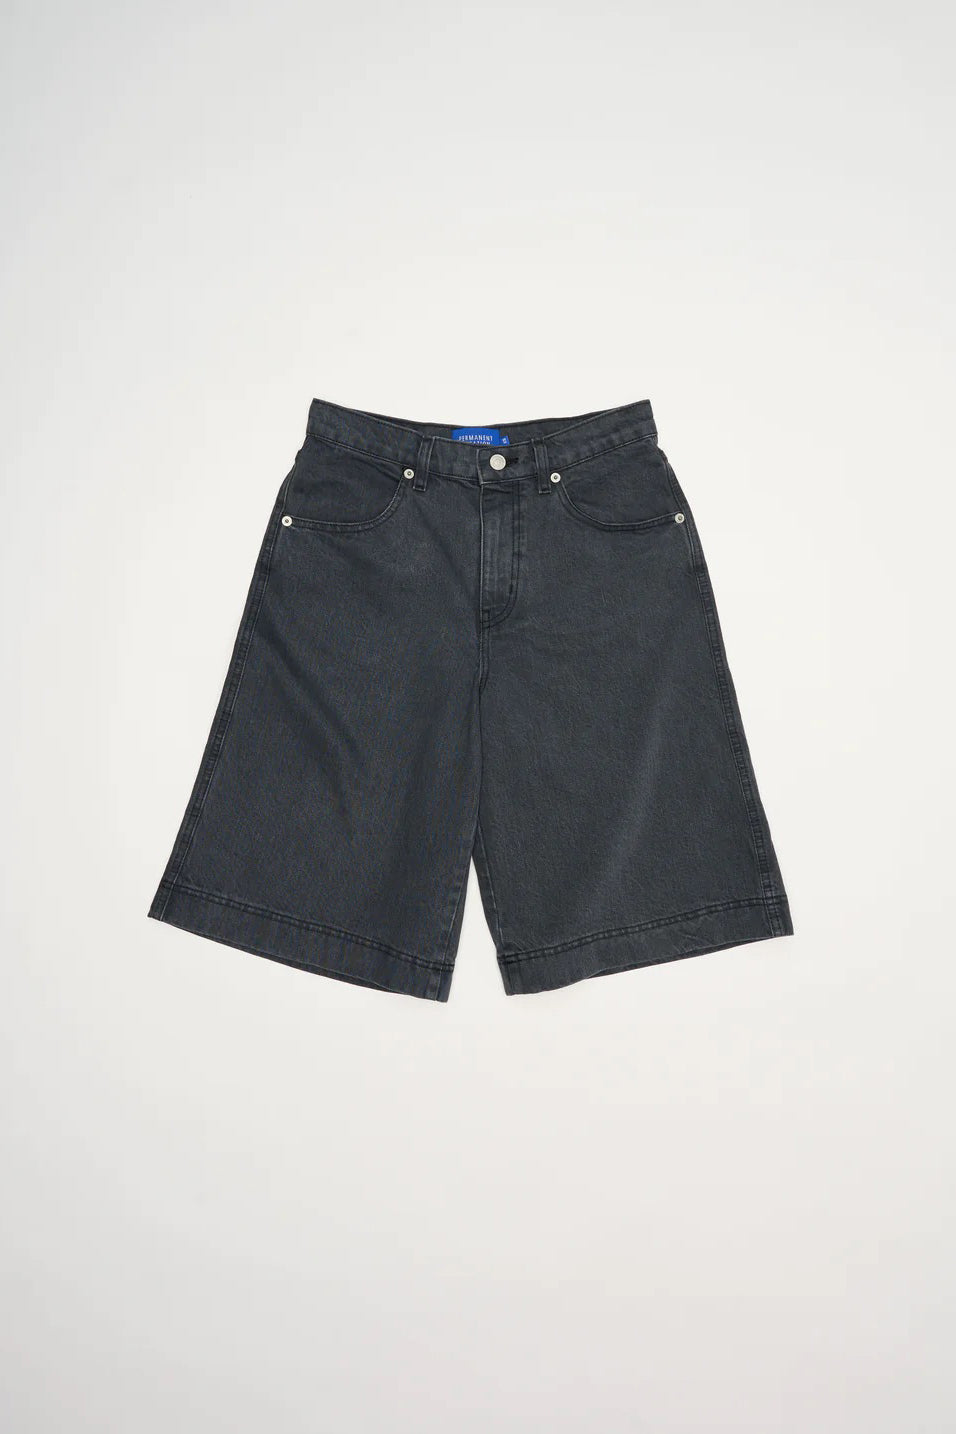 PV Repose Denim Shorts // Slate